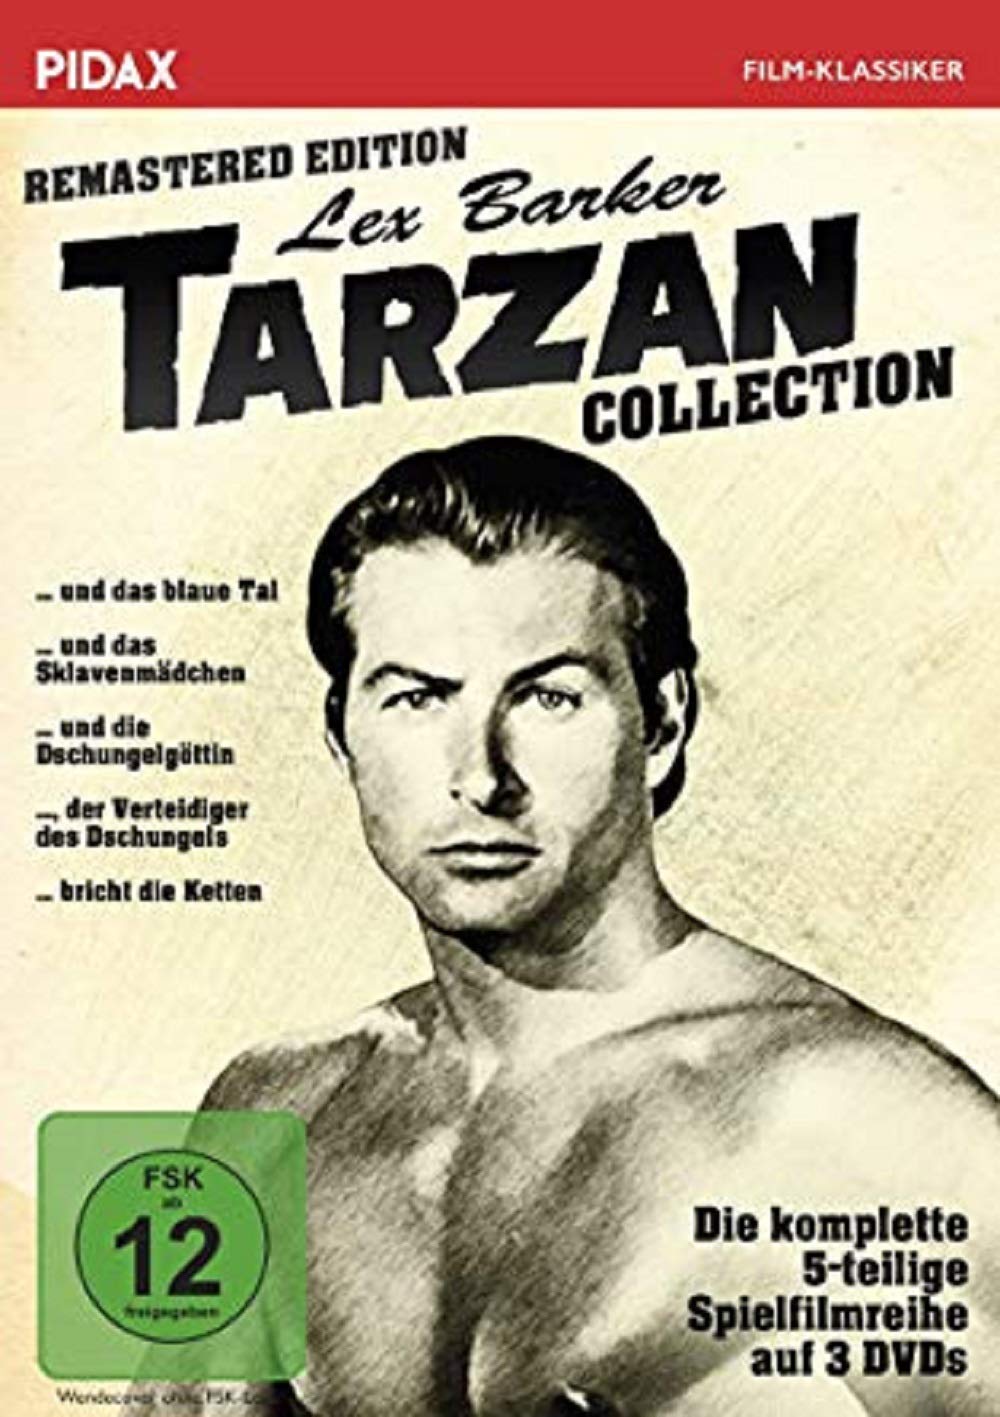 Tarzan Collection / Die Ultimative Tarzan Collection / 11 Filme